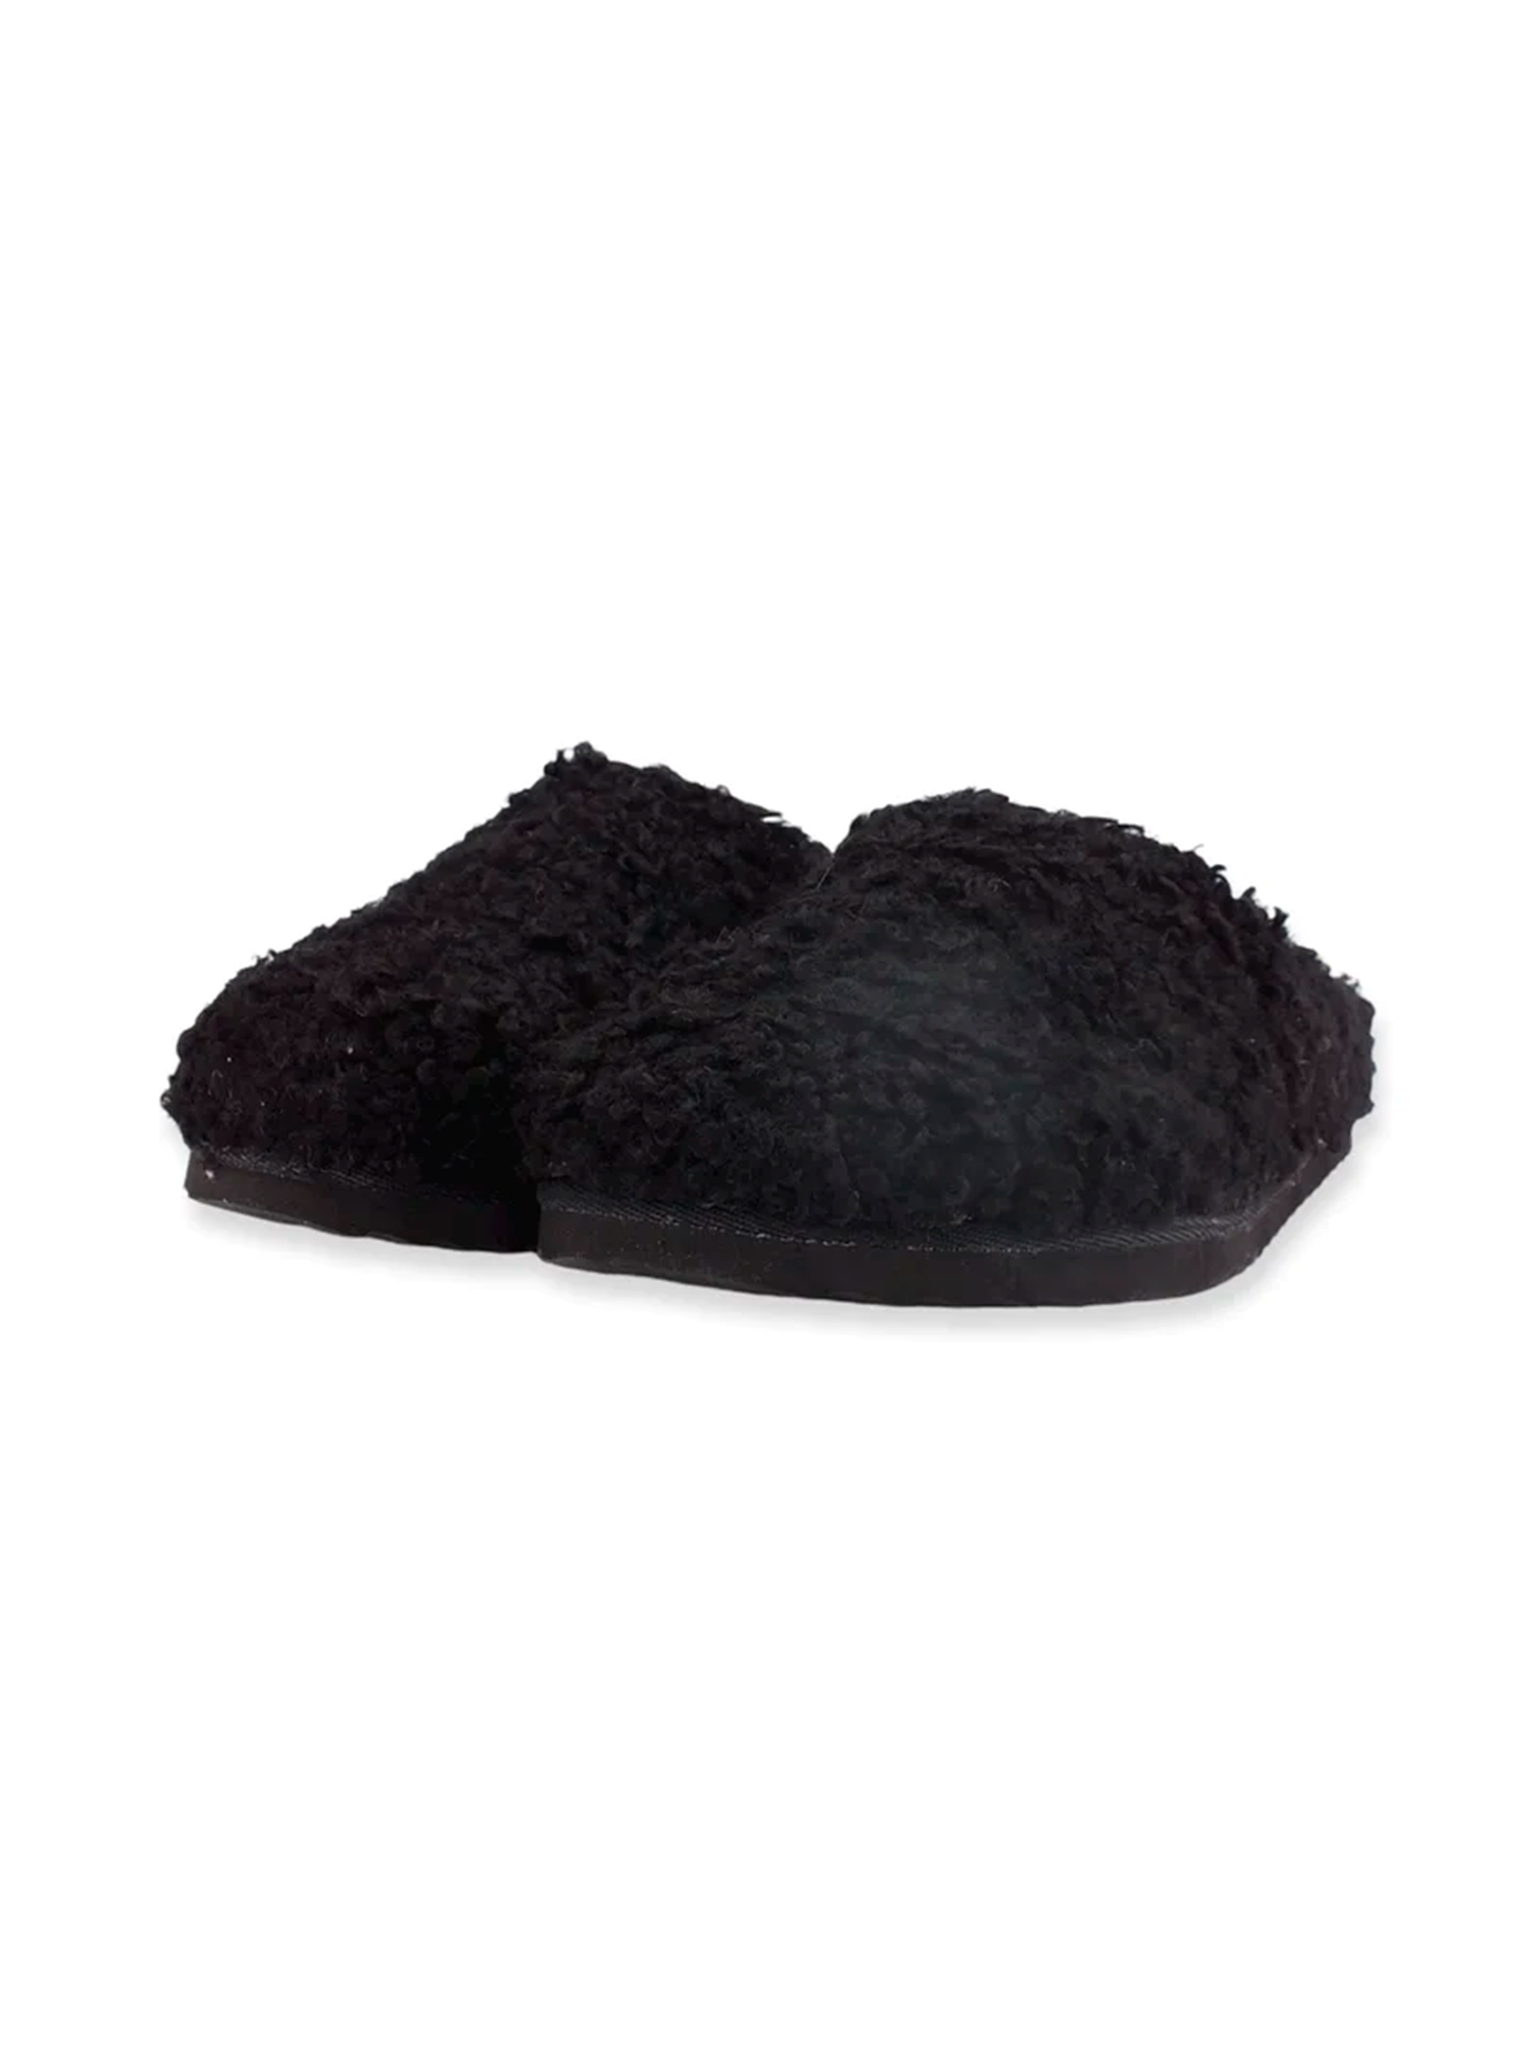 Furry slipper closed toe Black